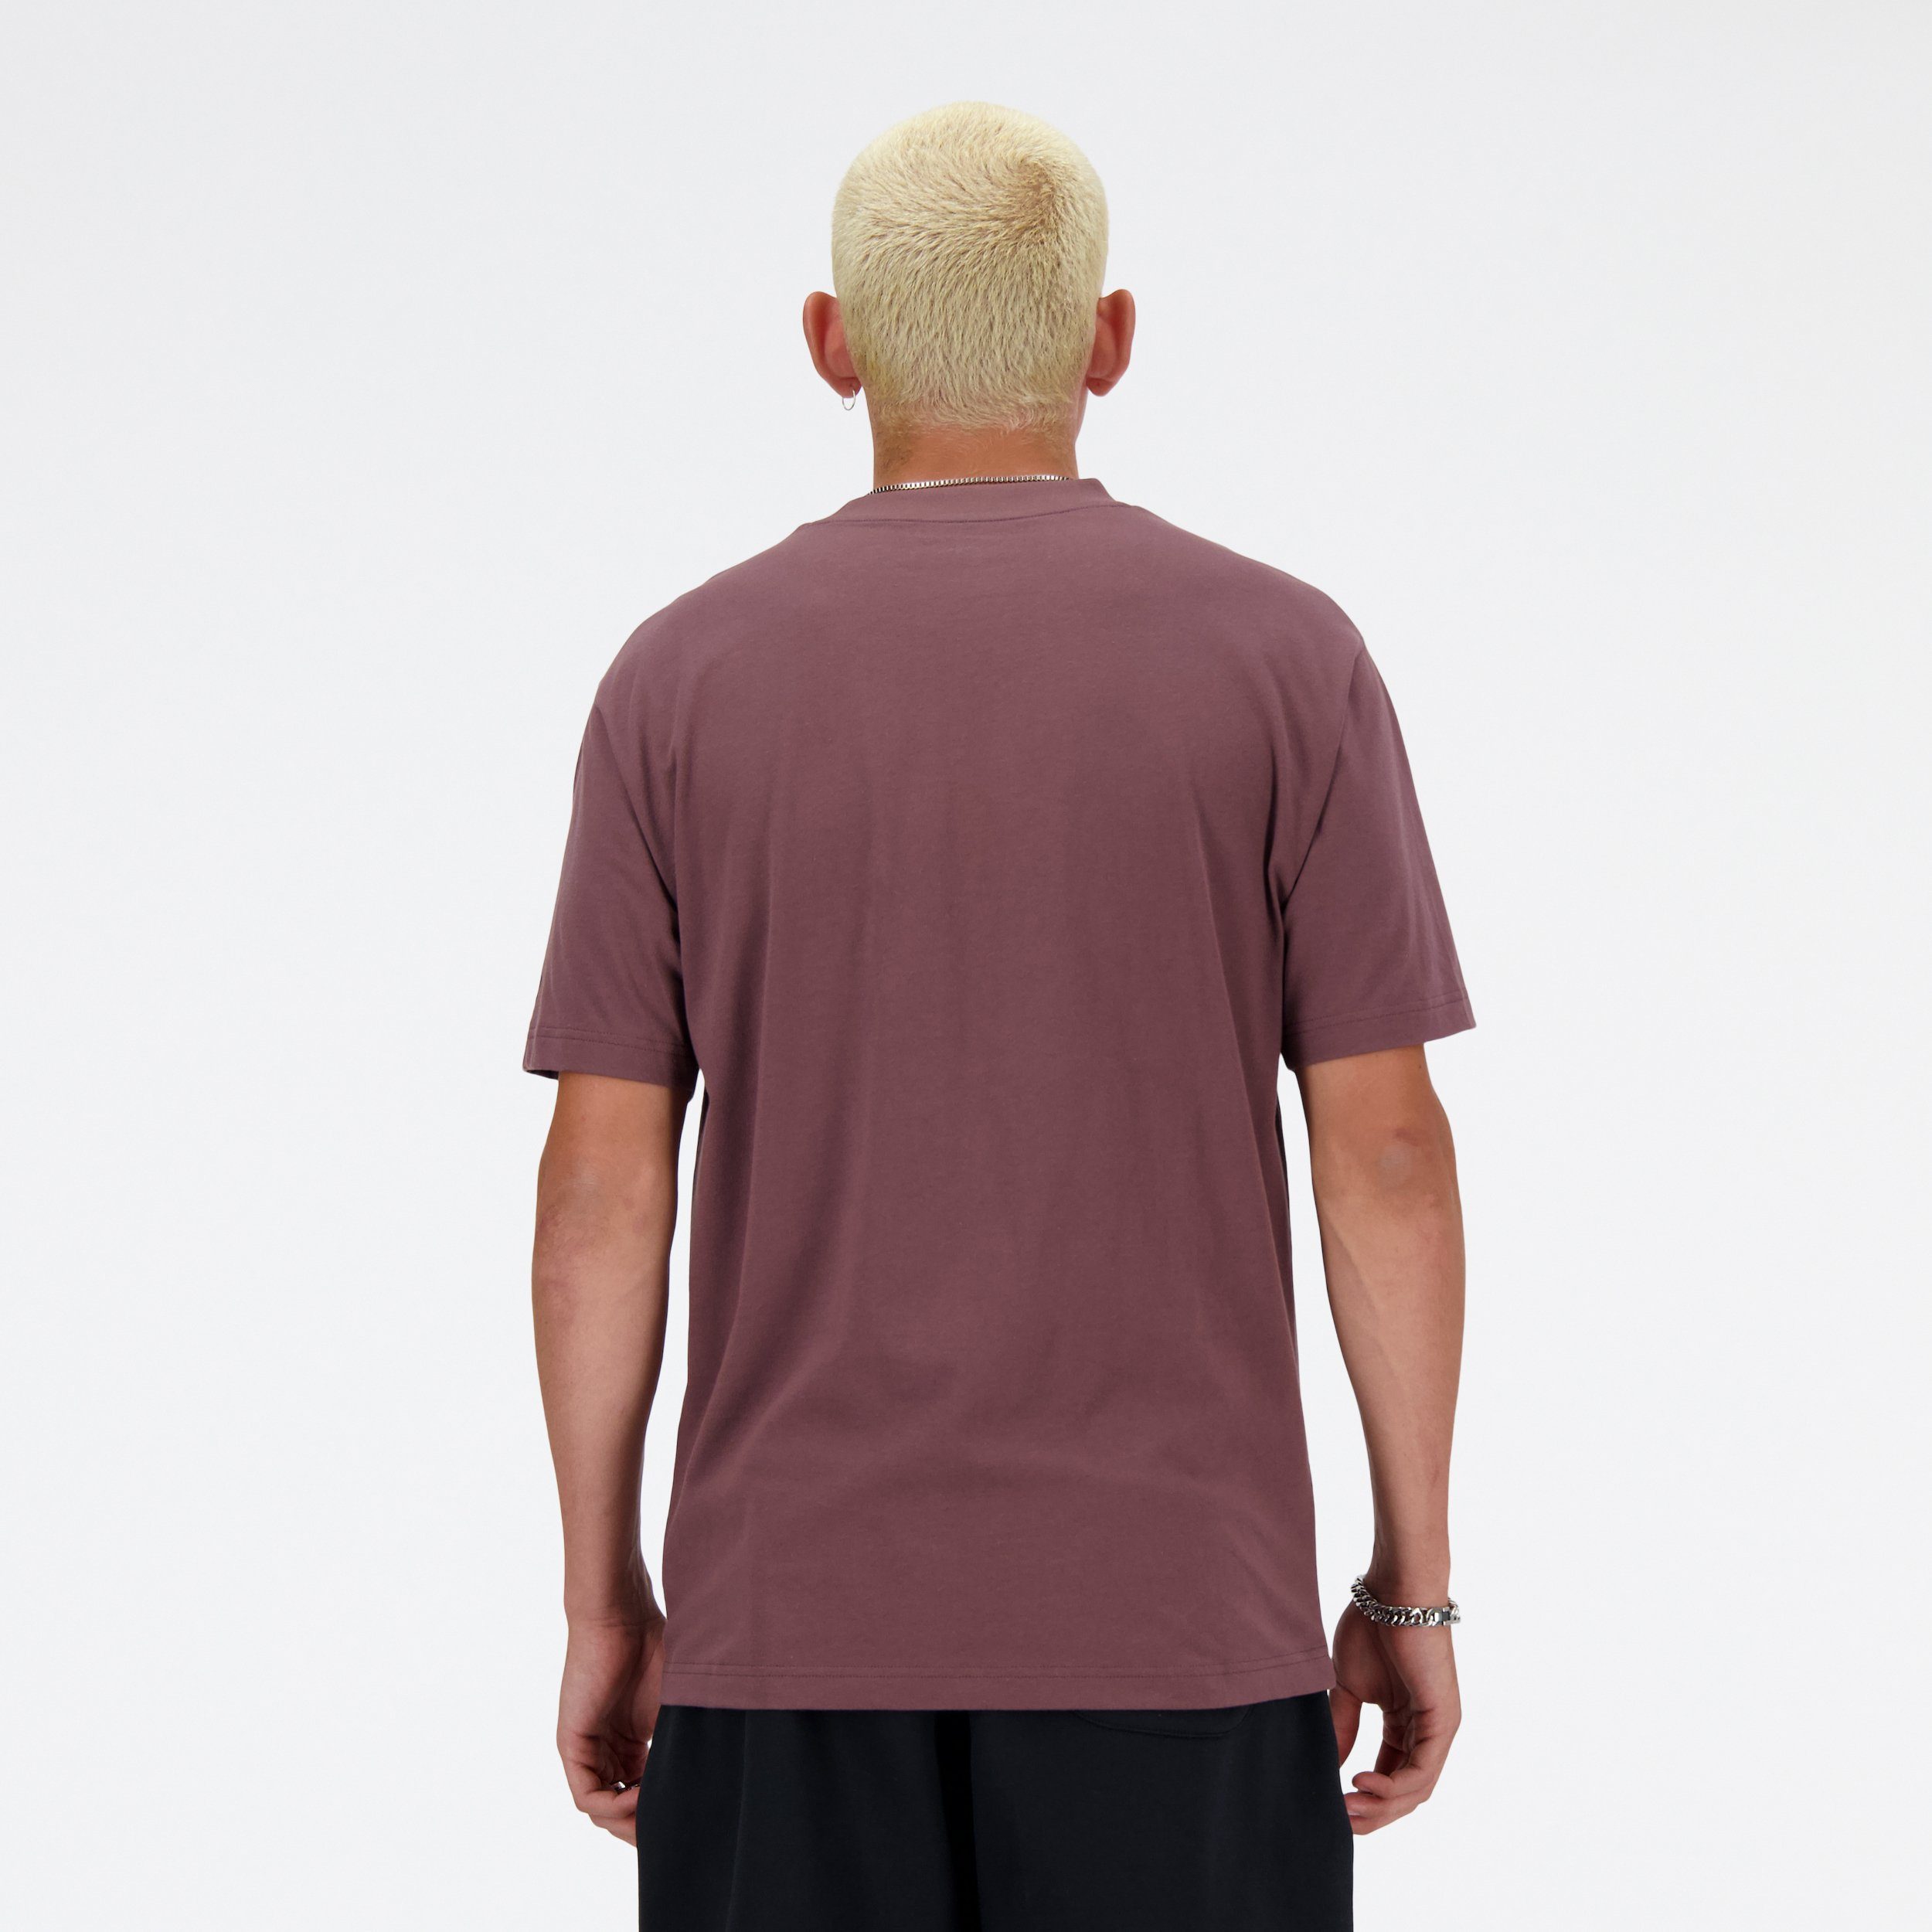 New Balance T-shirt MENS LIFESTYLE T-SHIRT